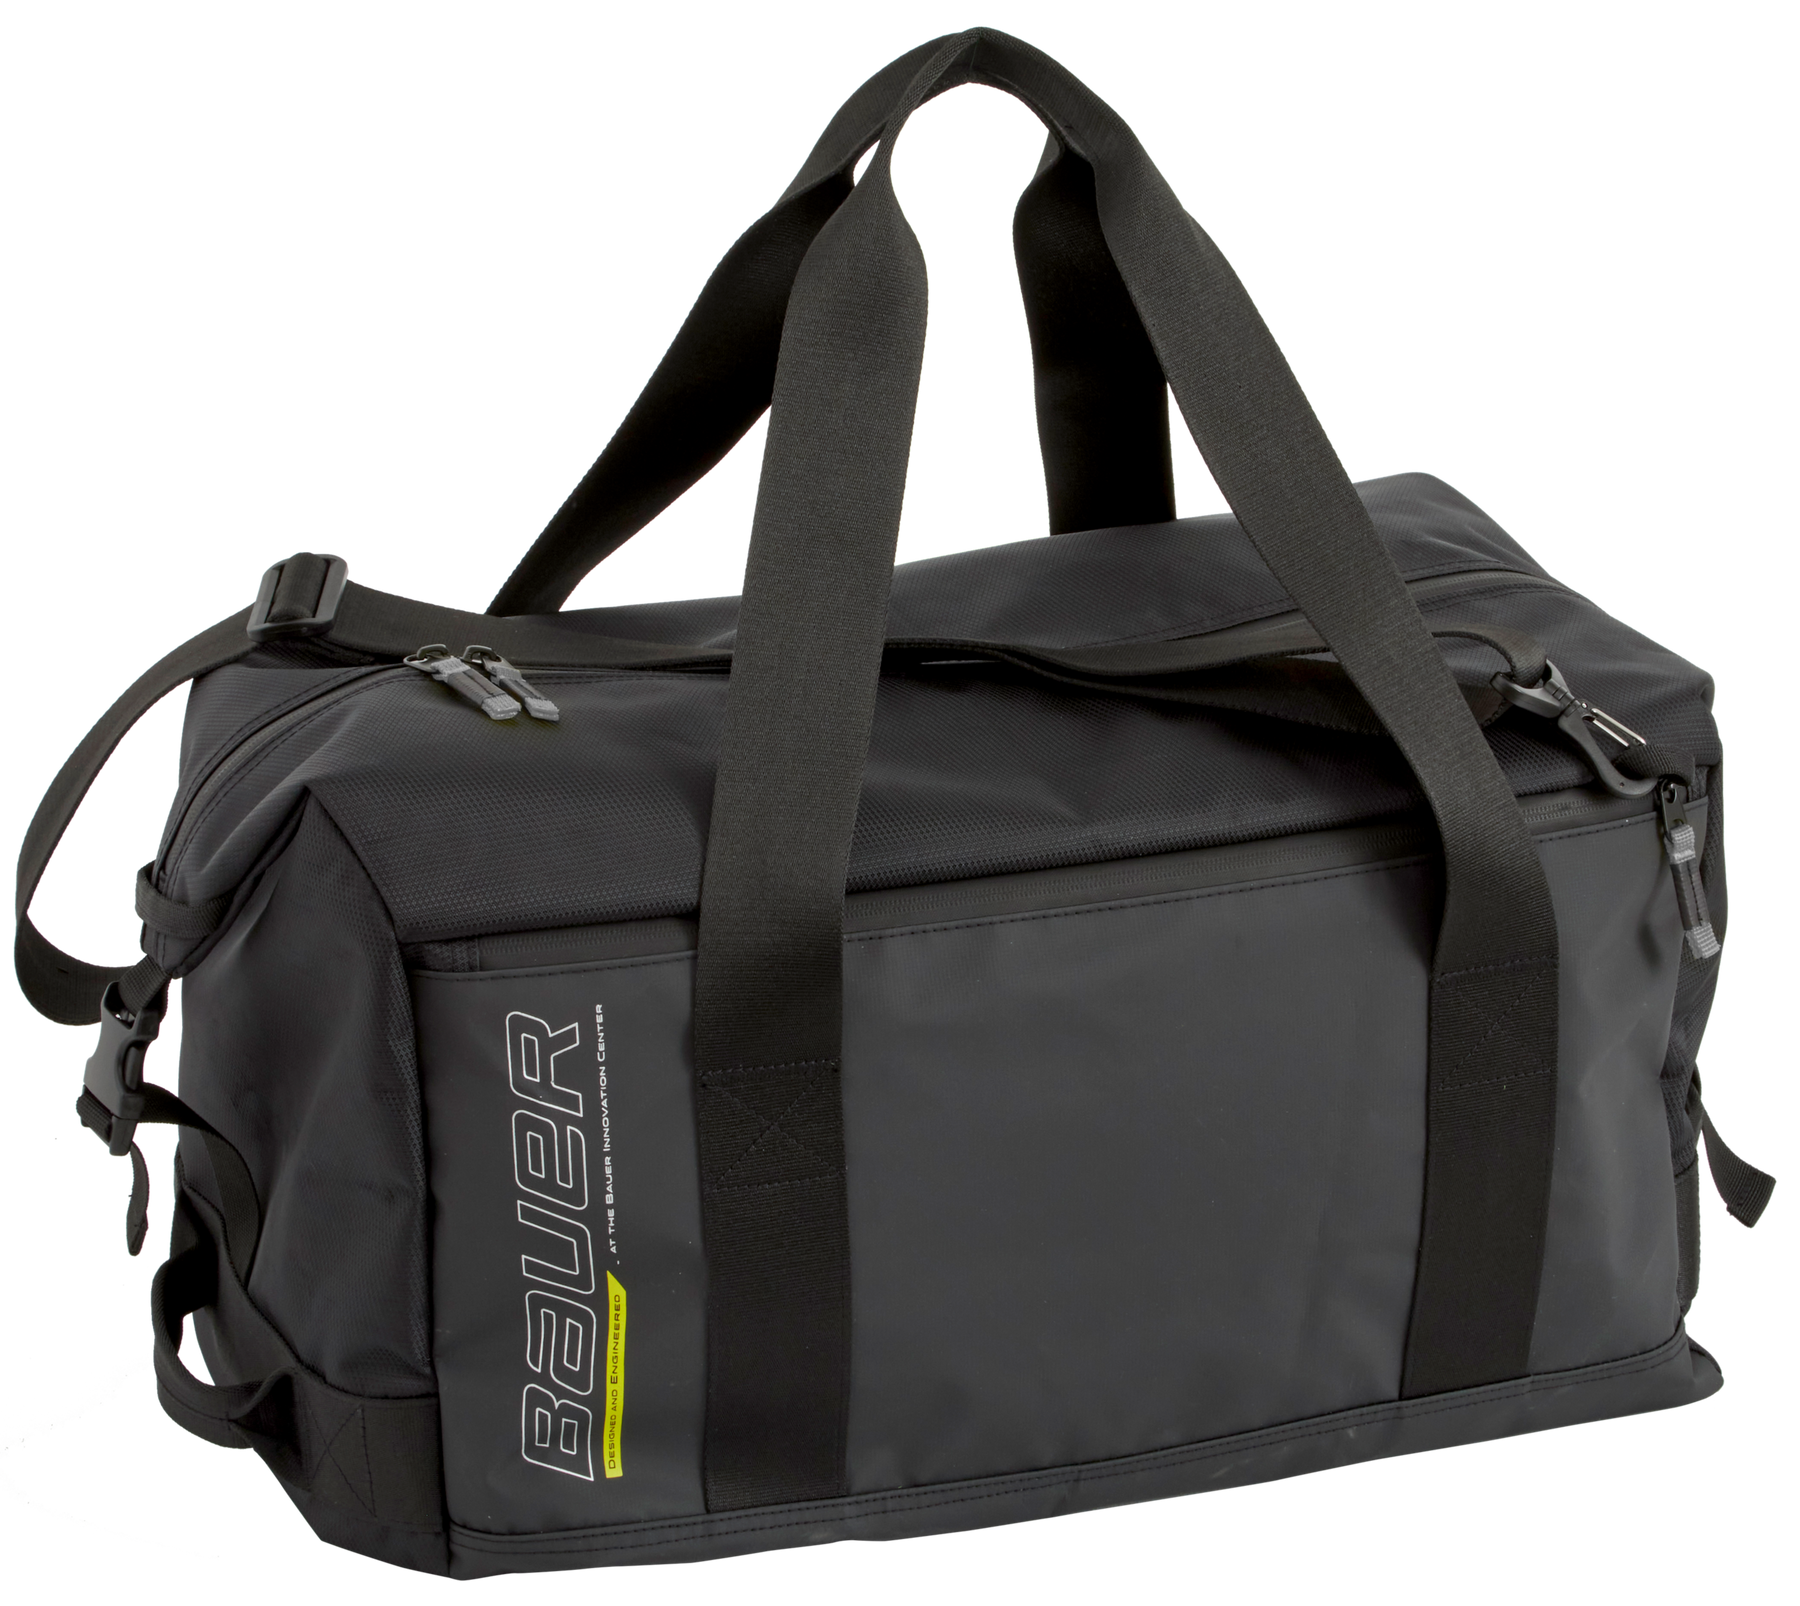 Bauer S21 Elite Duffle Bag